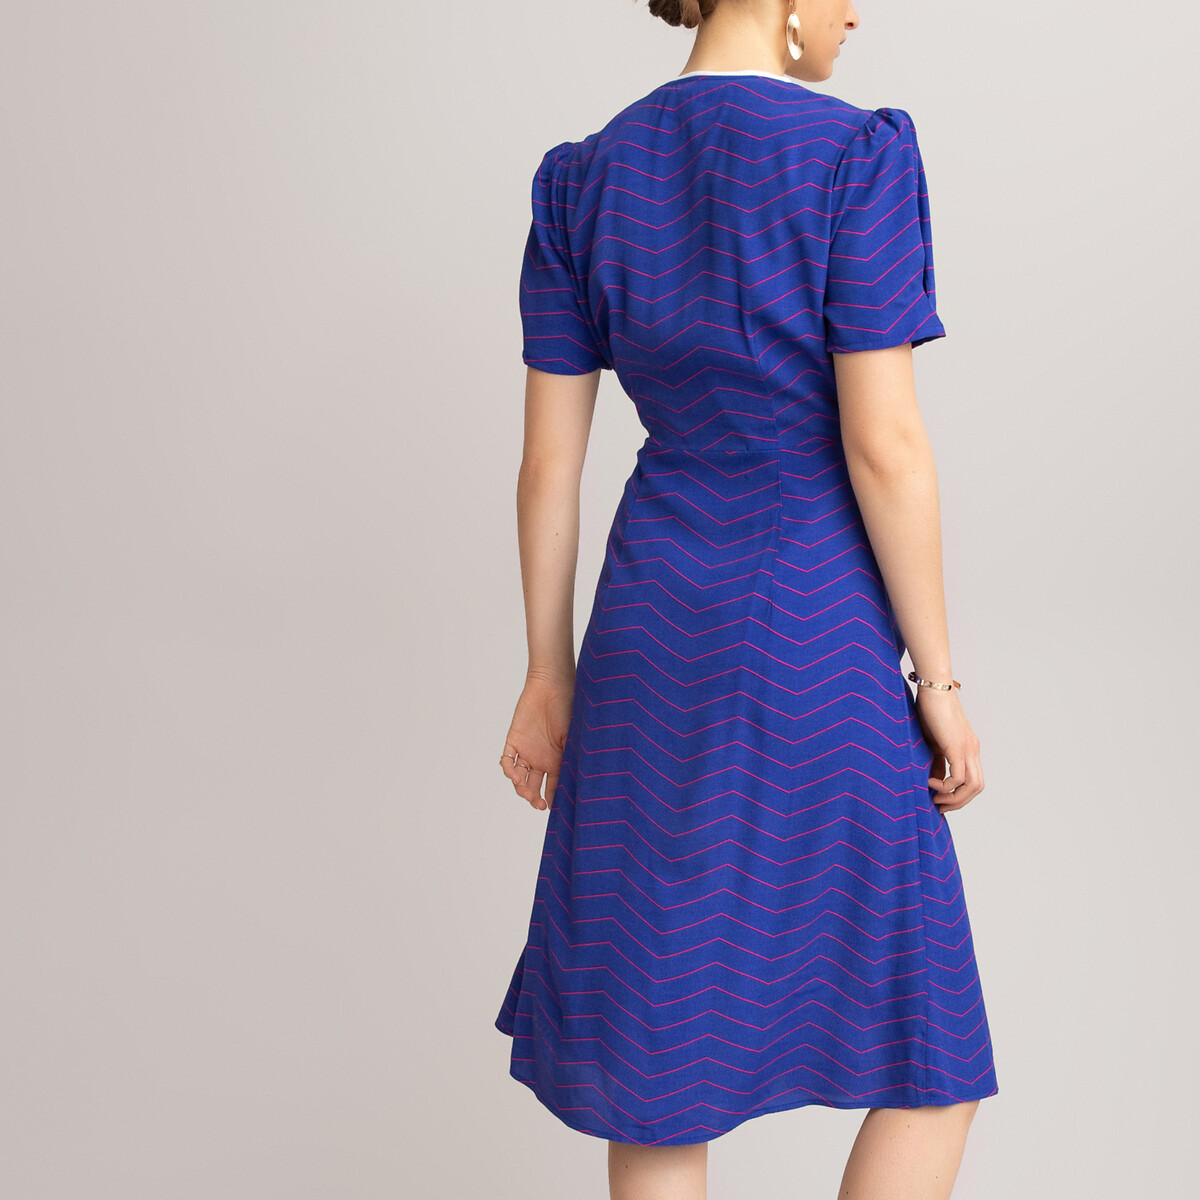 Платье LaRedoute С запахом с короткими рукавами и рисунком 46 (FR) - 52 (RUS) синий, размер 46 (FR) - 52 (RUS) С запахом с короткими рукавами и рисунком 46 (FR) - 52 (RUS) синий - фото 4